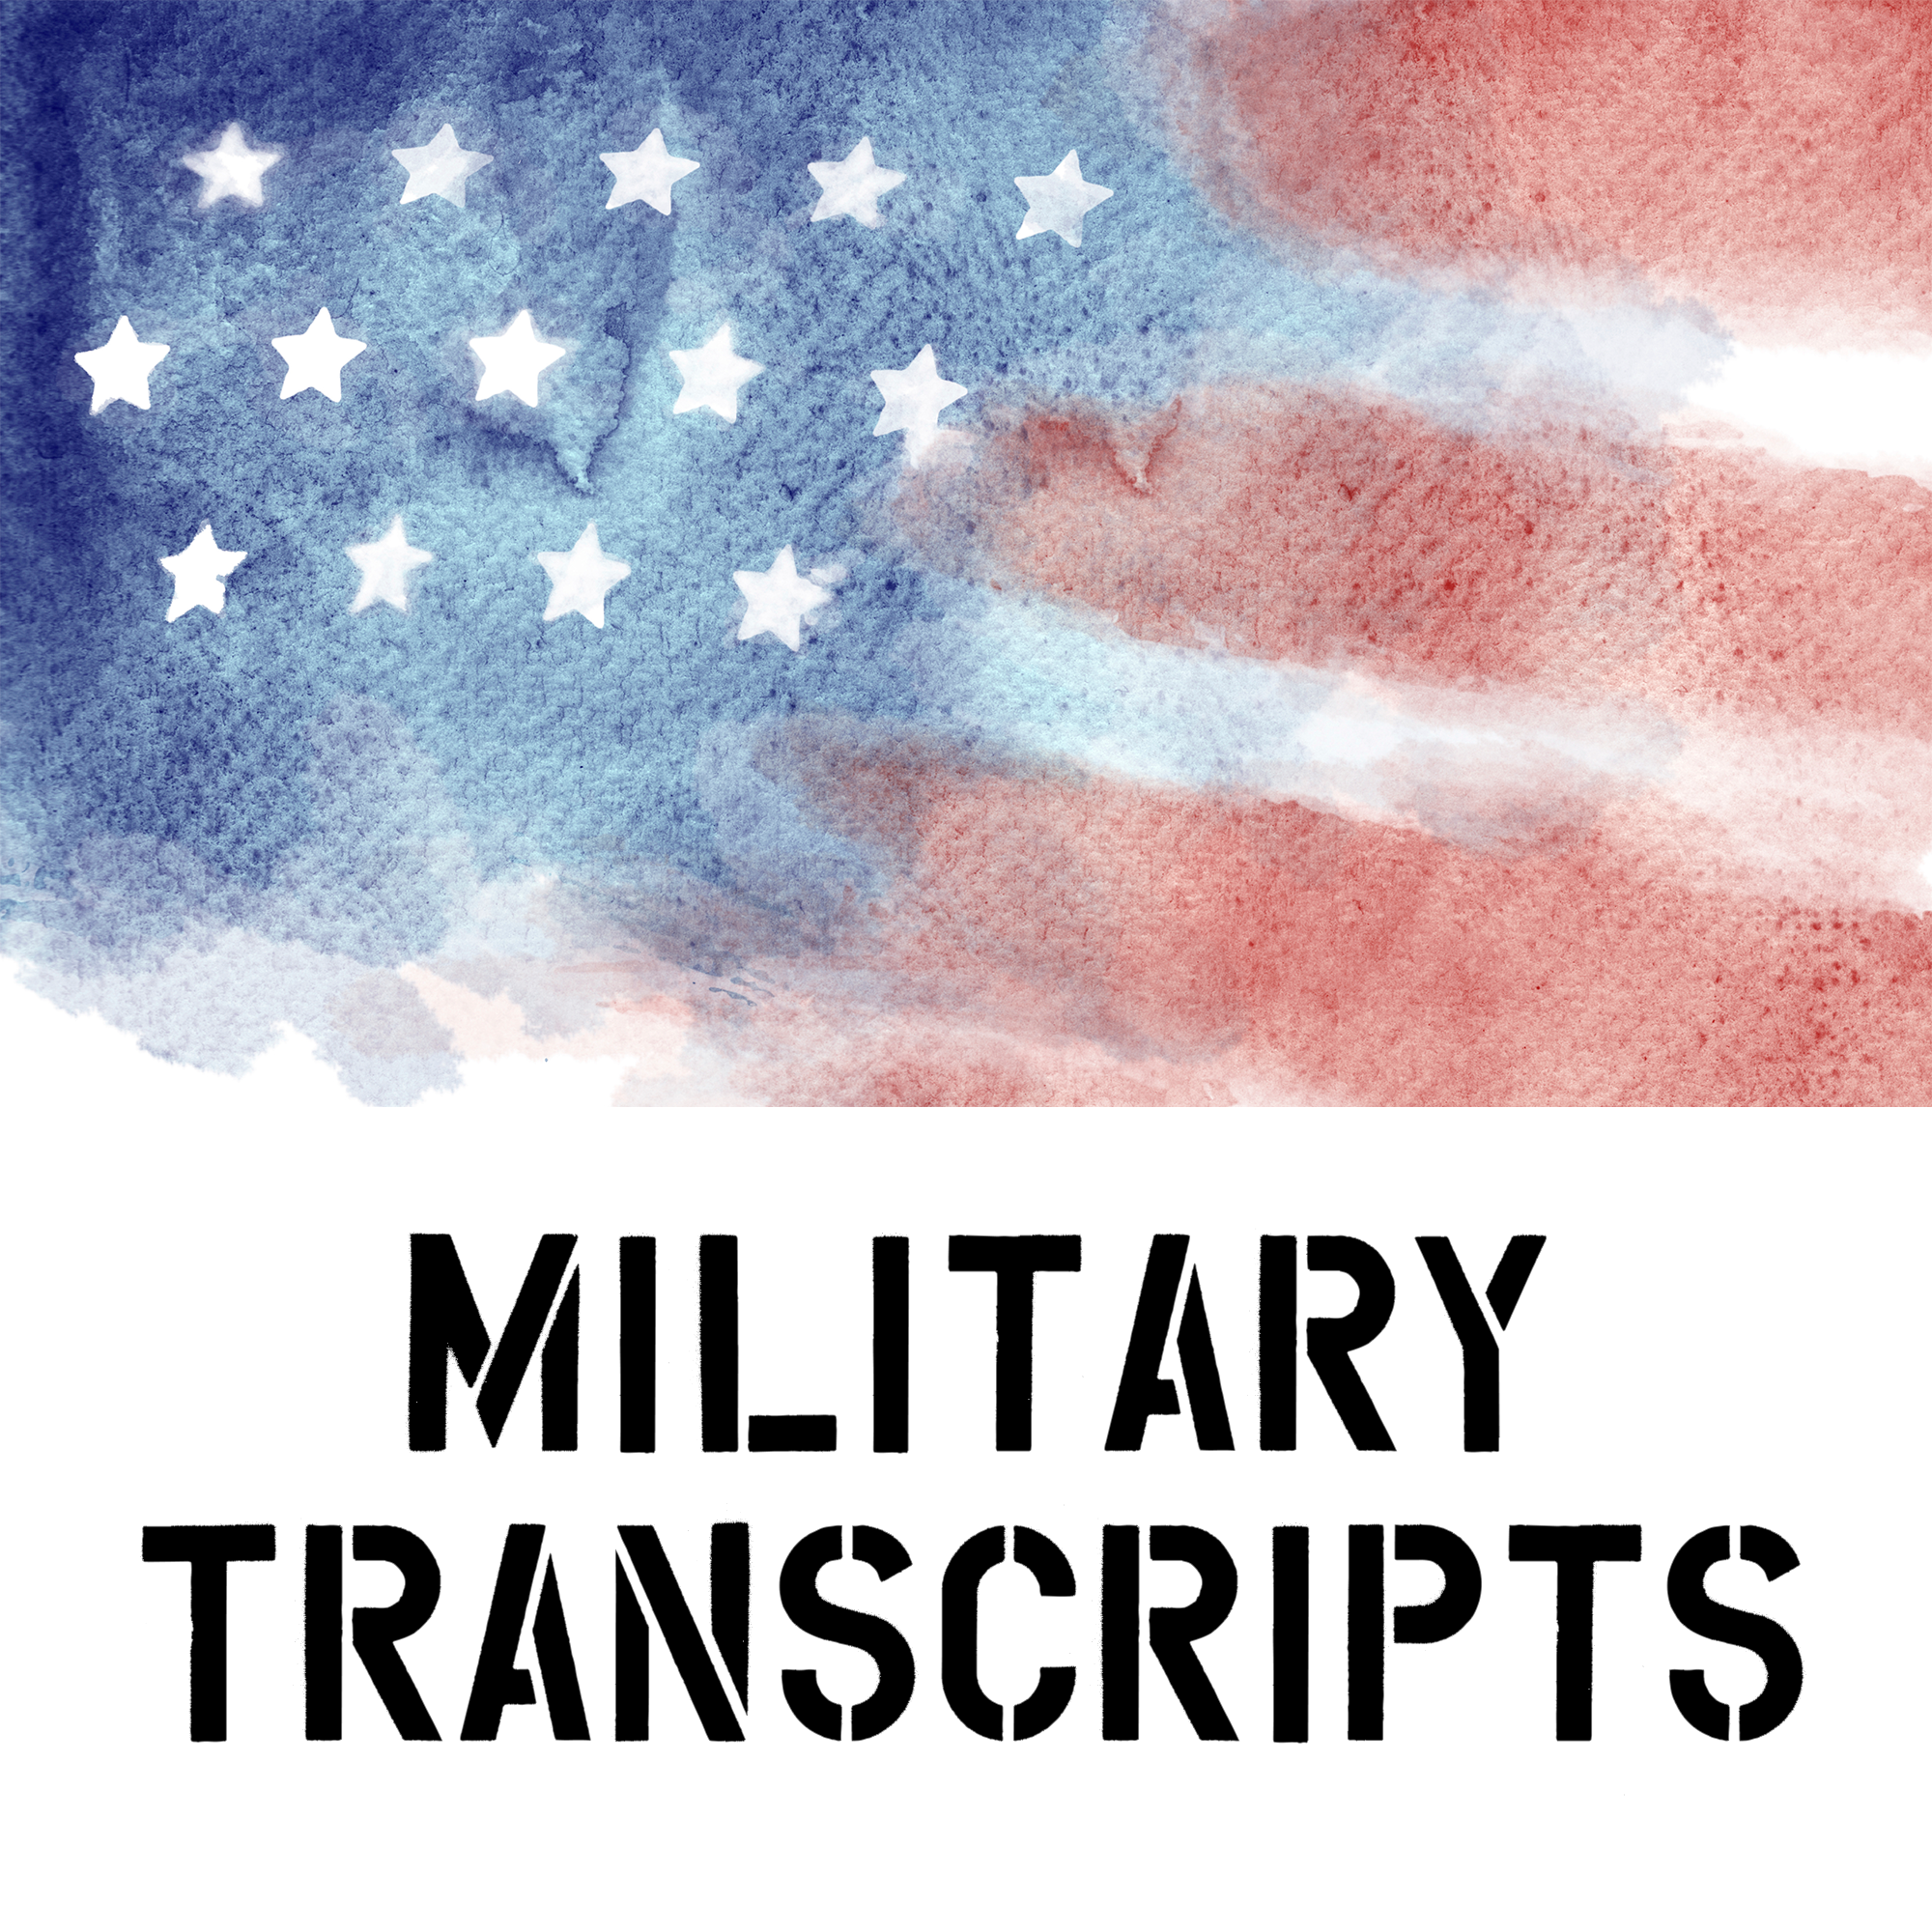 Military Transcripts 